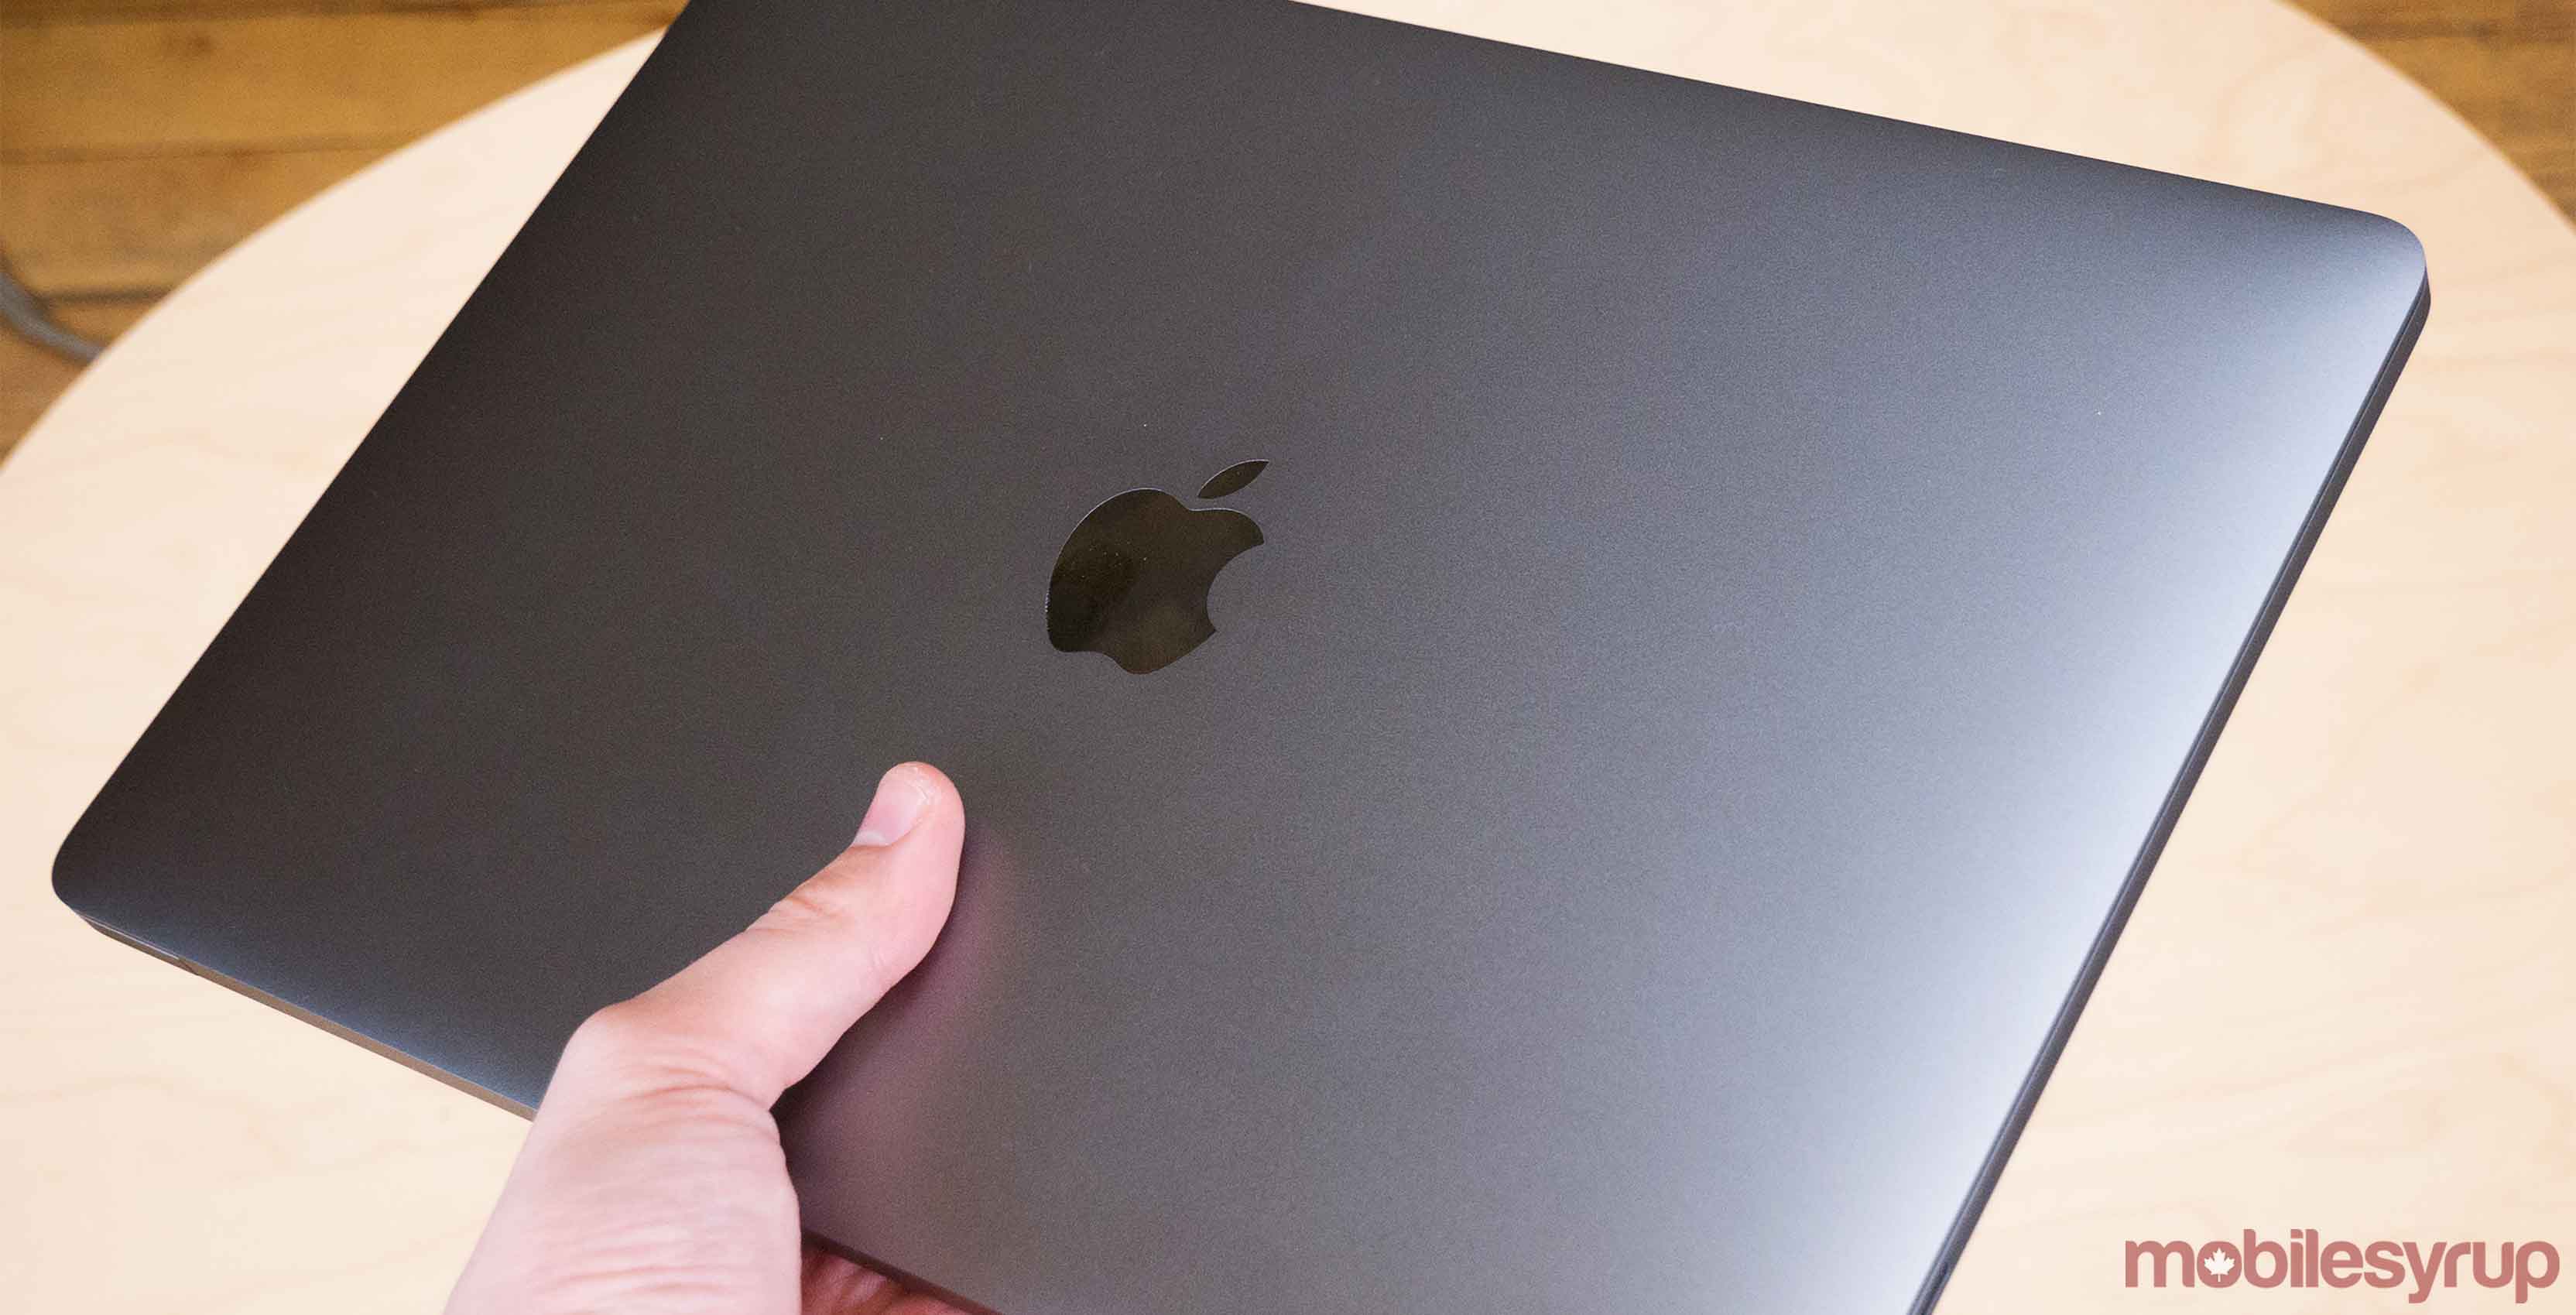 Apple MacBook Pro computer can run final cut pro x